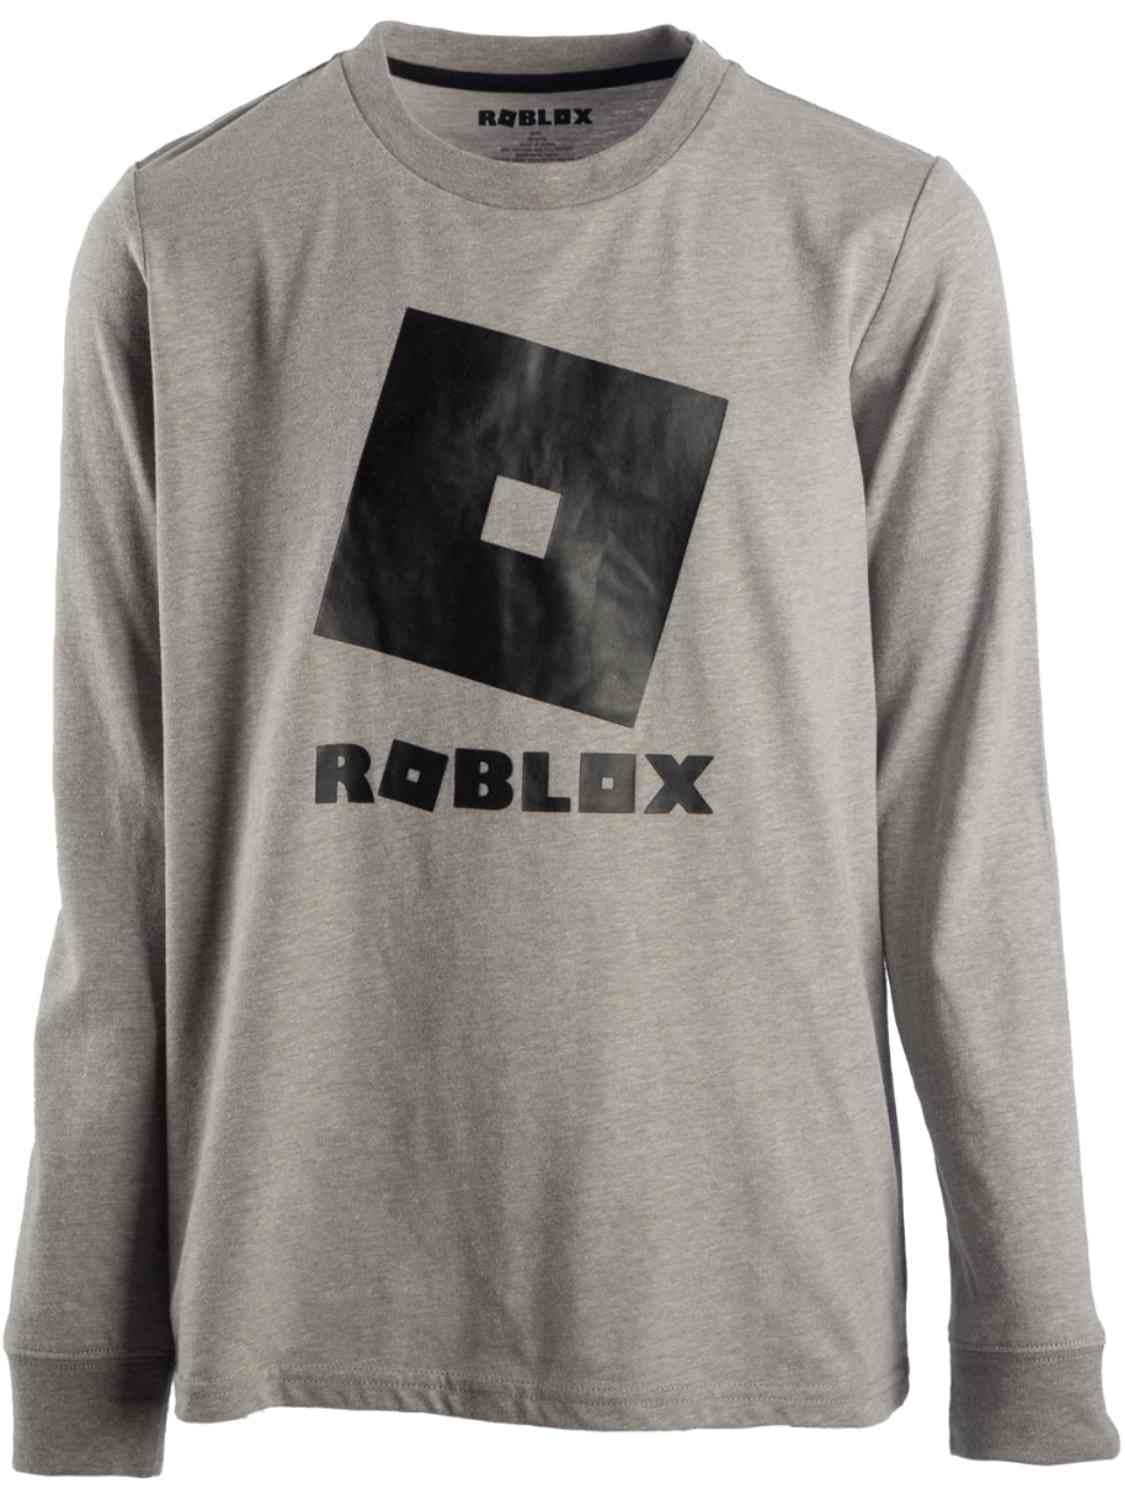 Boys Gray Black Roblox T Shirt Long Sleeve Tee Shirt Walmart Com Walmart Com - roblox t shirt trash